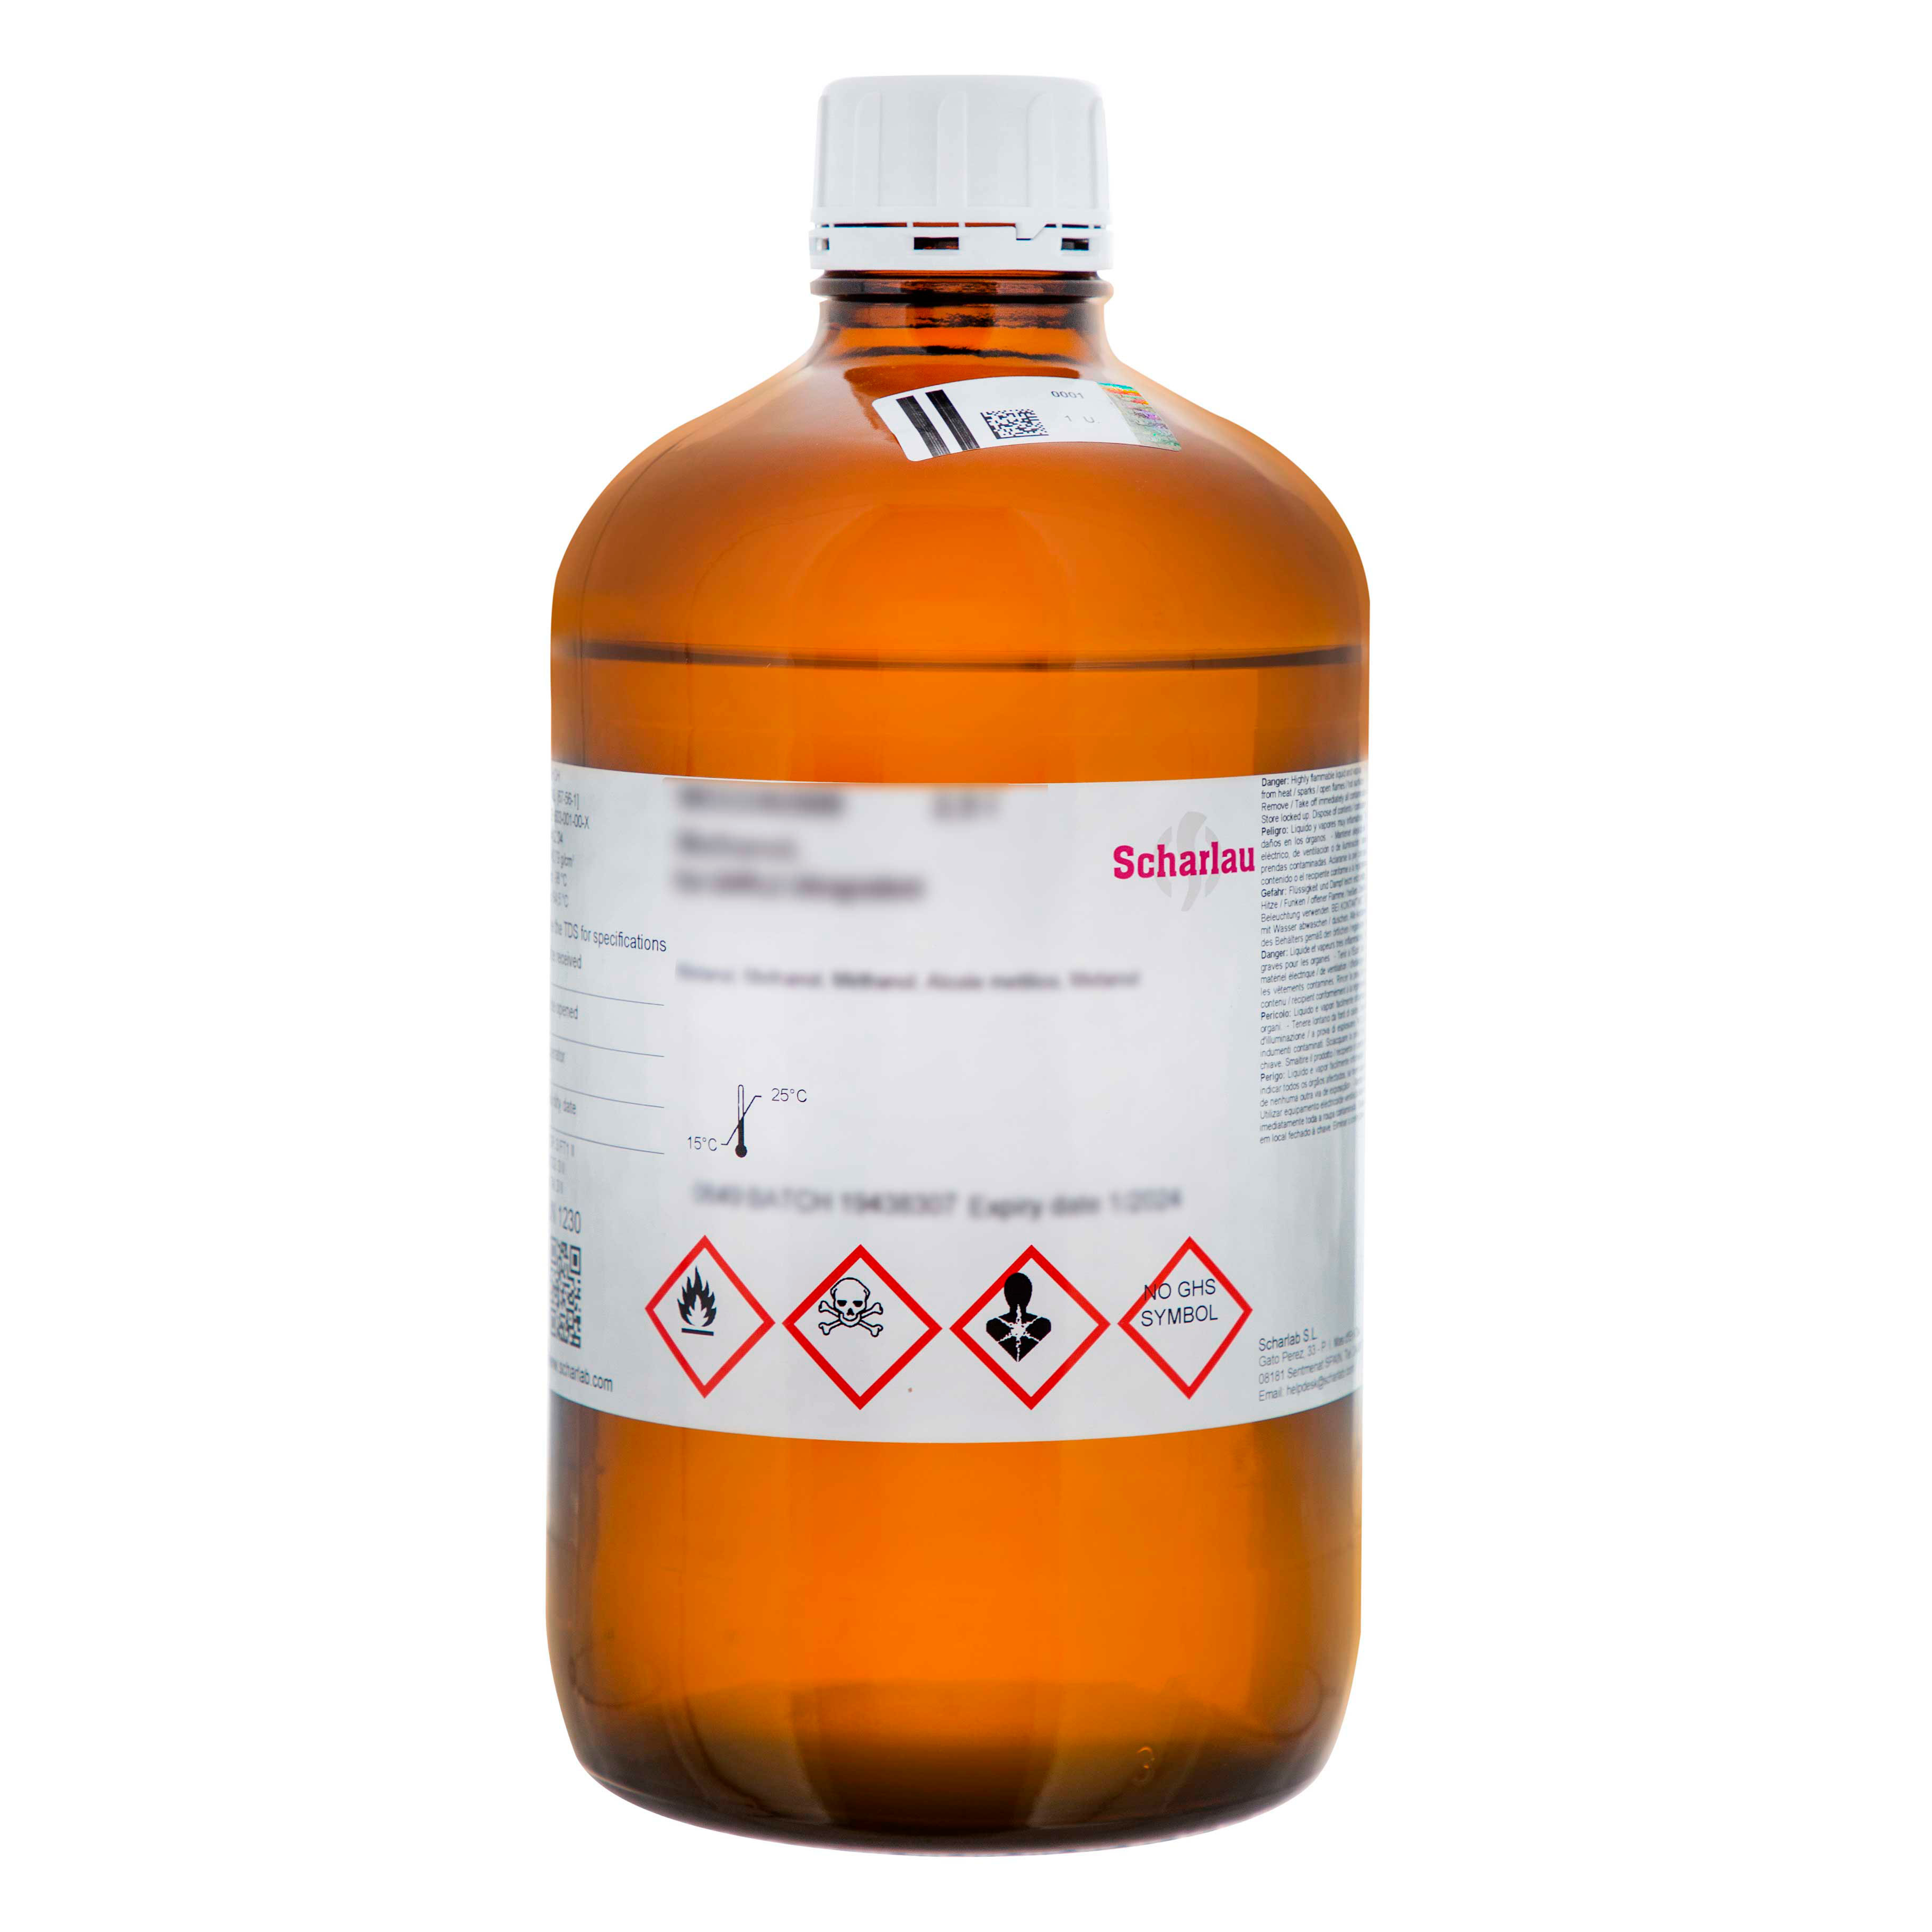 1,4-Dioxane, EssentQ®, stabilized with 2,5 ppm of 2,6-Di-tert-butyl-4-methylphenol (BHT)